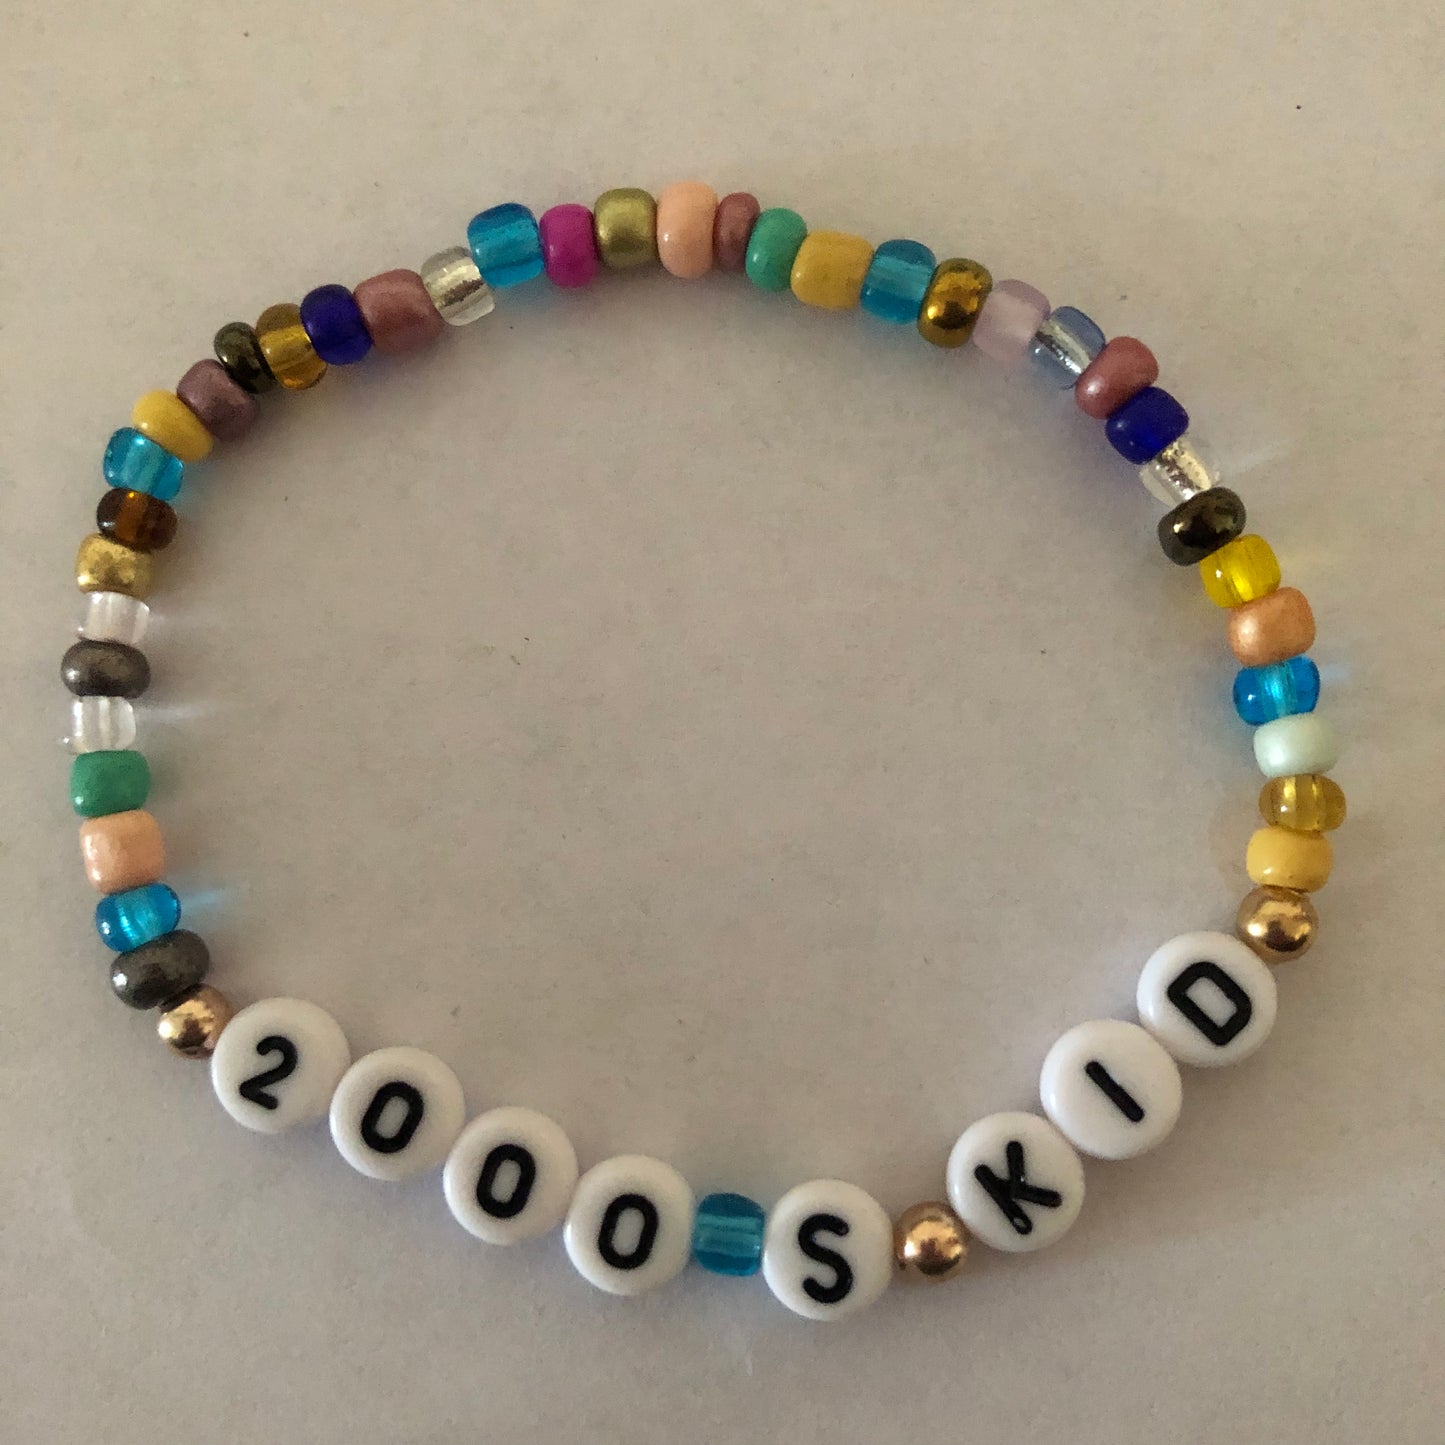 2000’s kid y2k bracelet